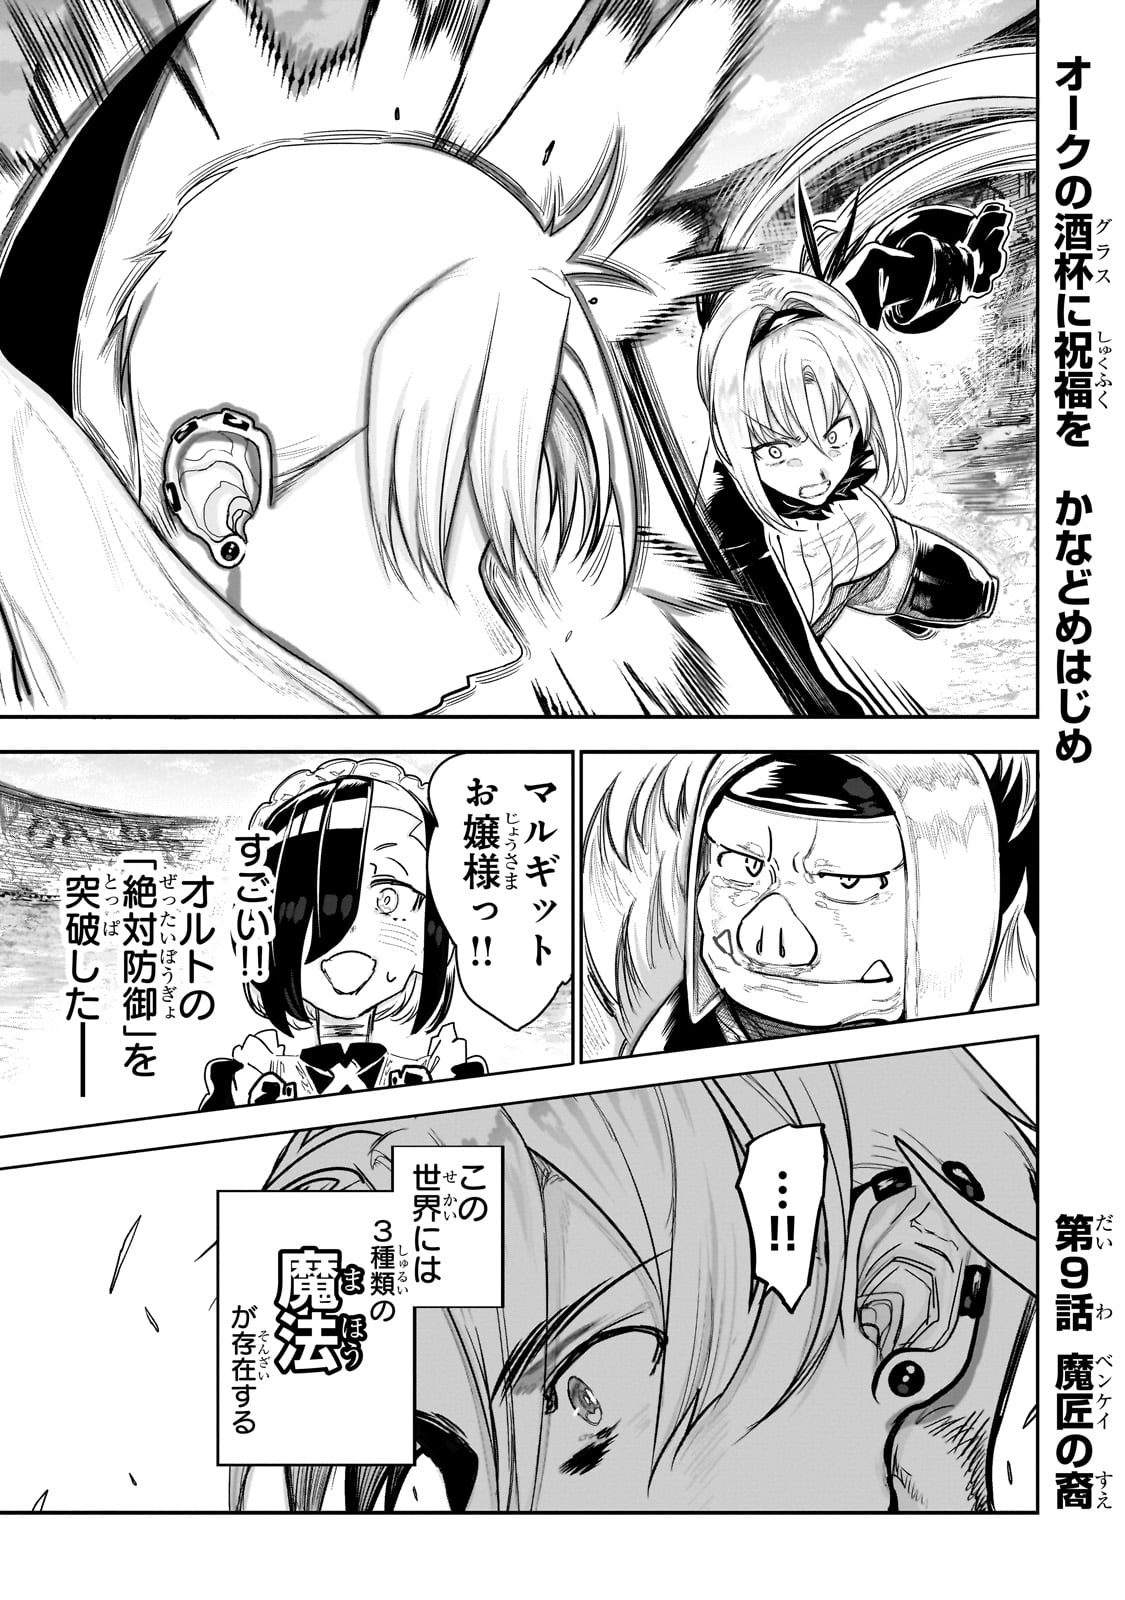 Orc no Shuhai ni Shukufuku wo - Chapter 9 - Page 1